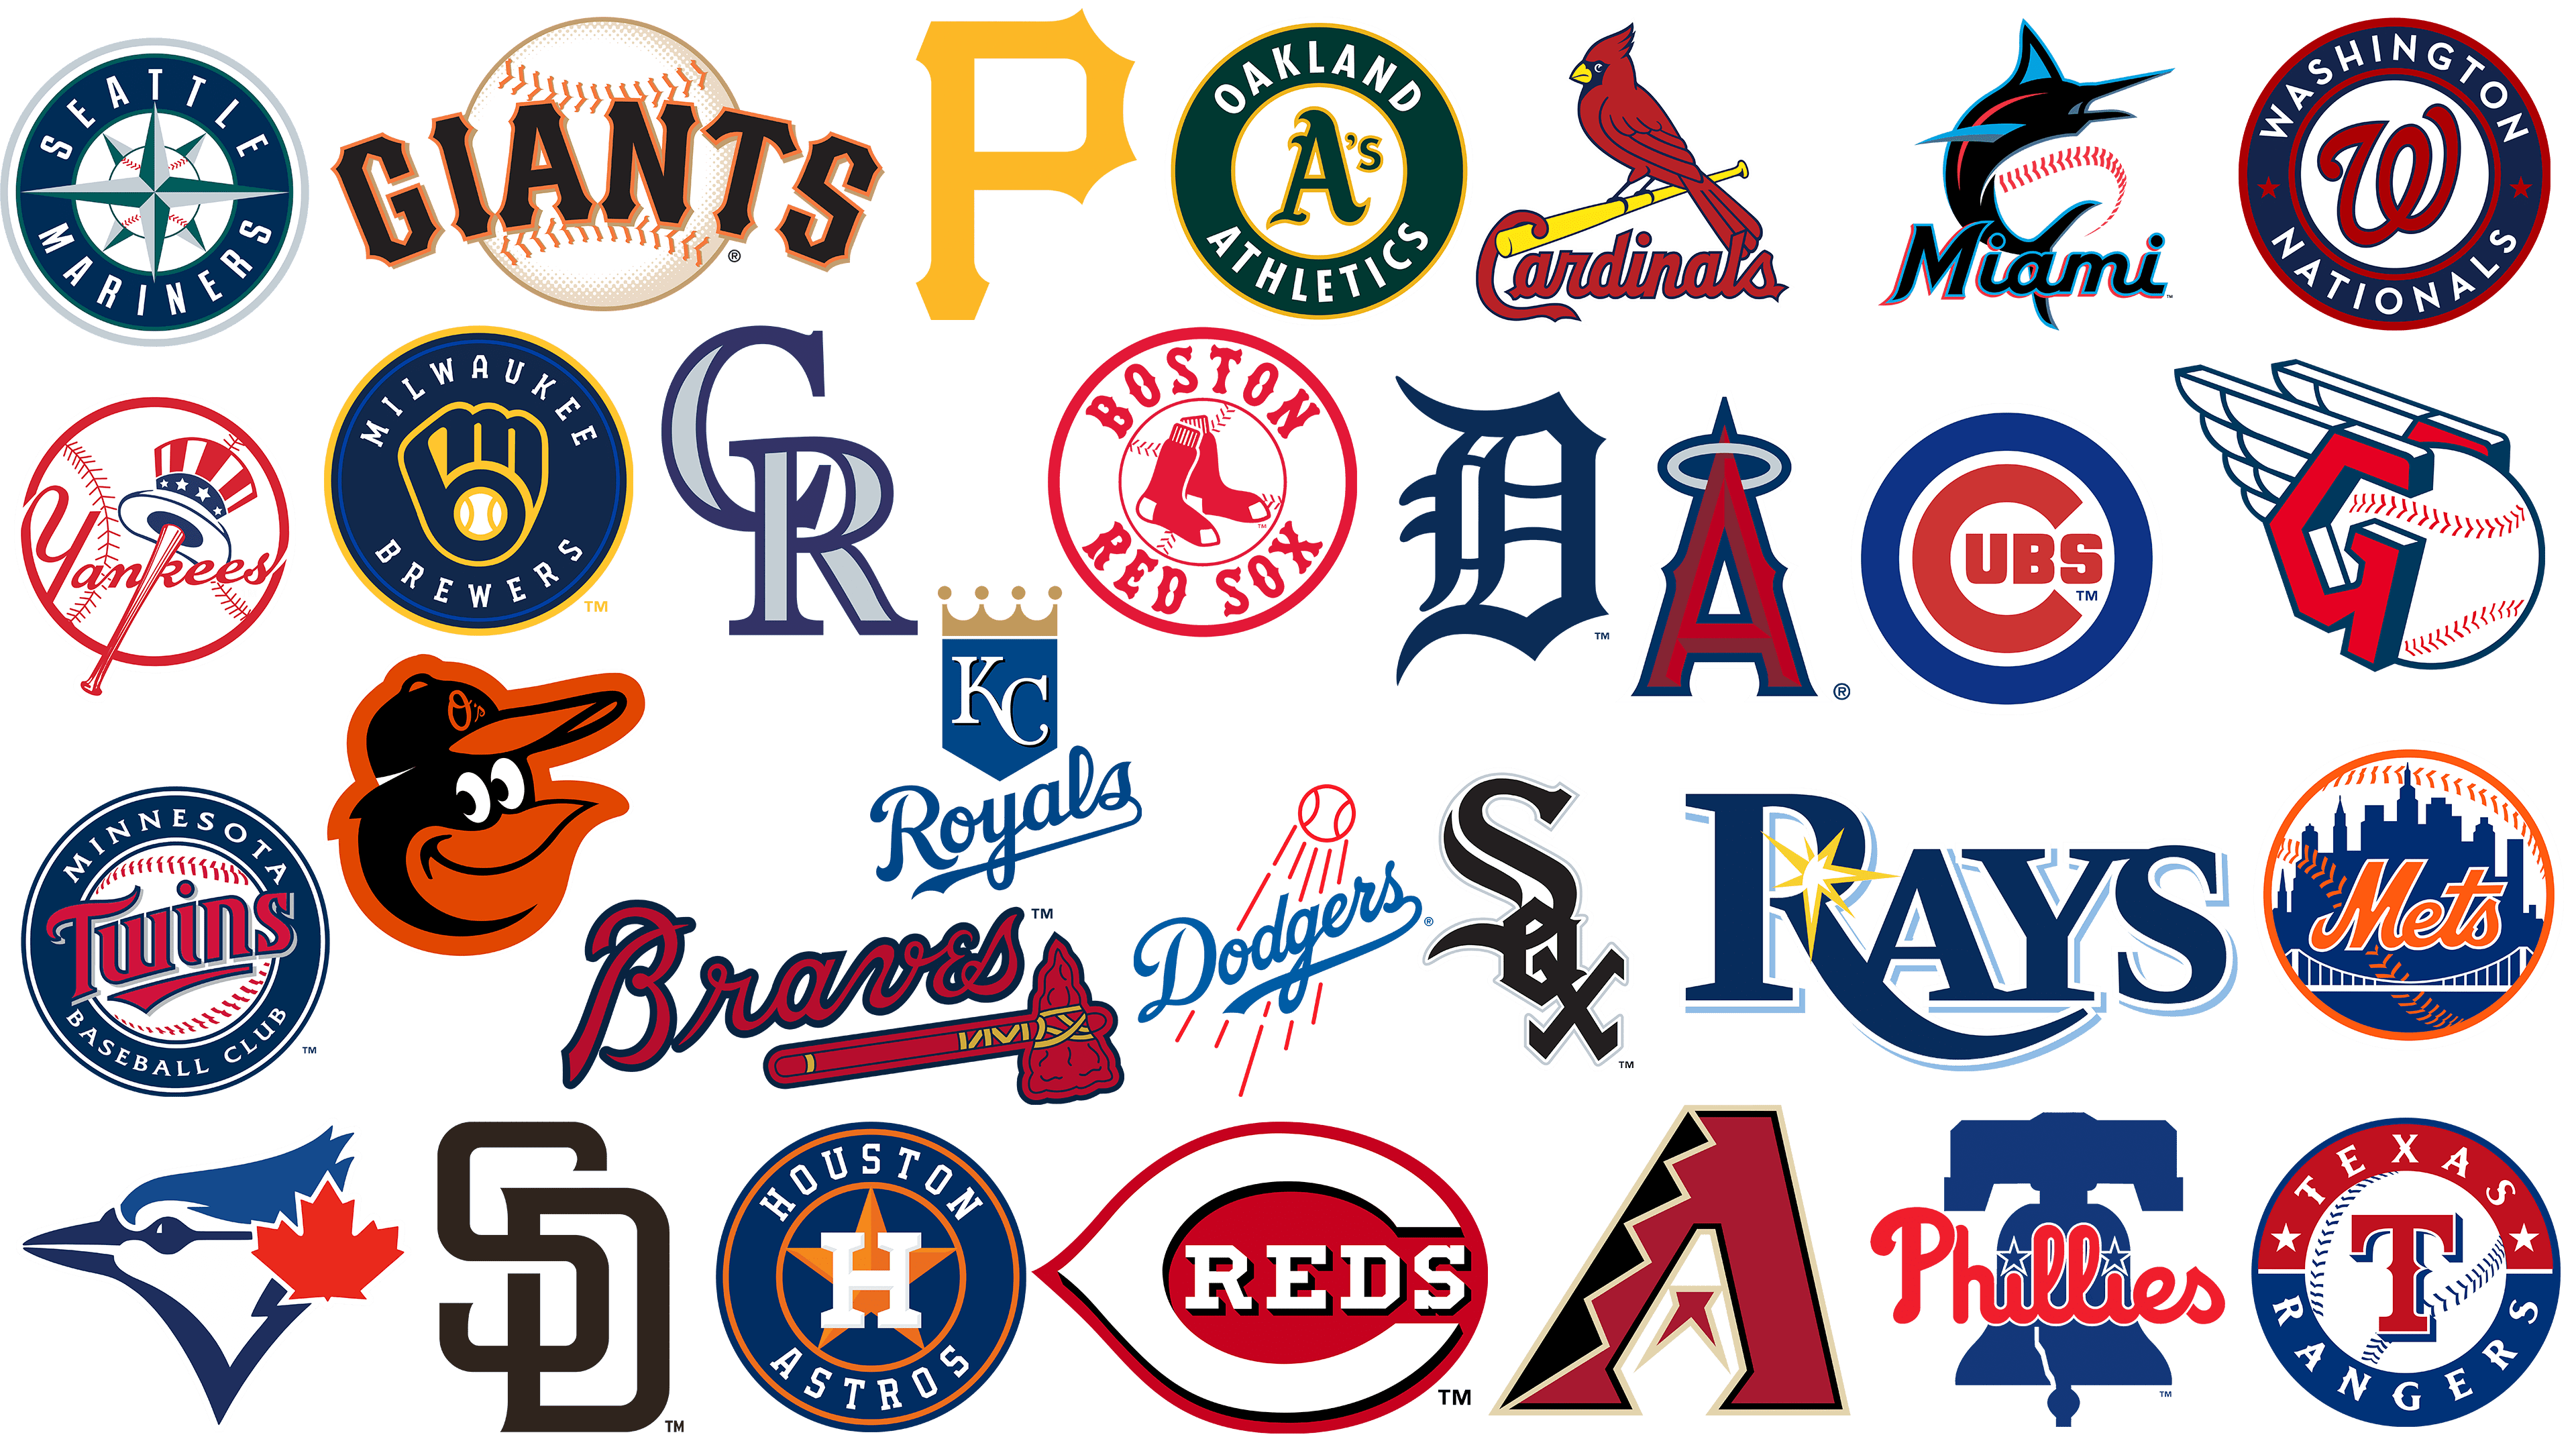 Minor League Baseball logo refresh incorporates connection to MLB